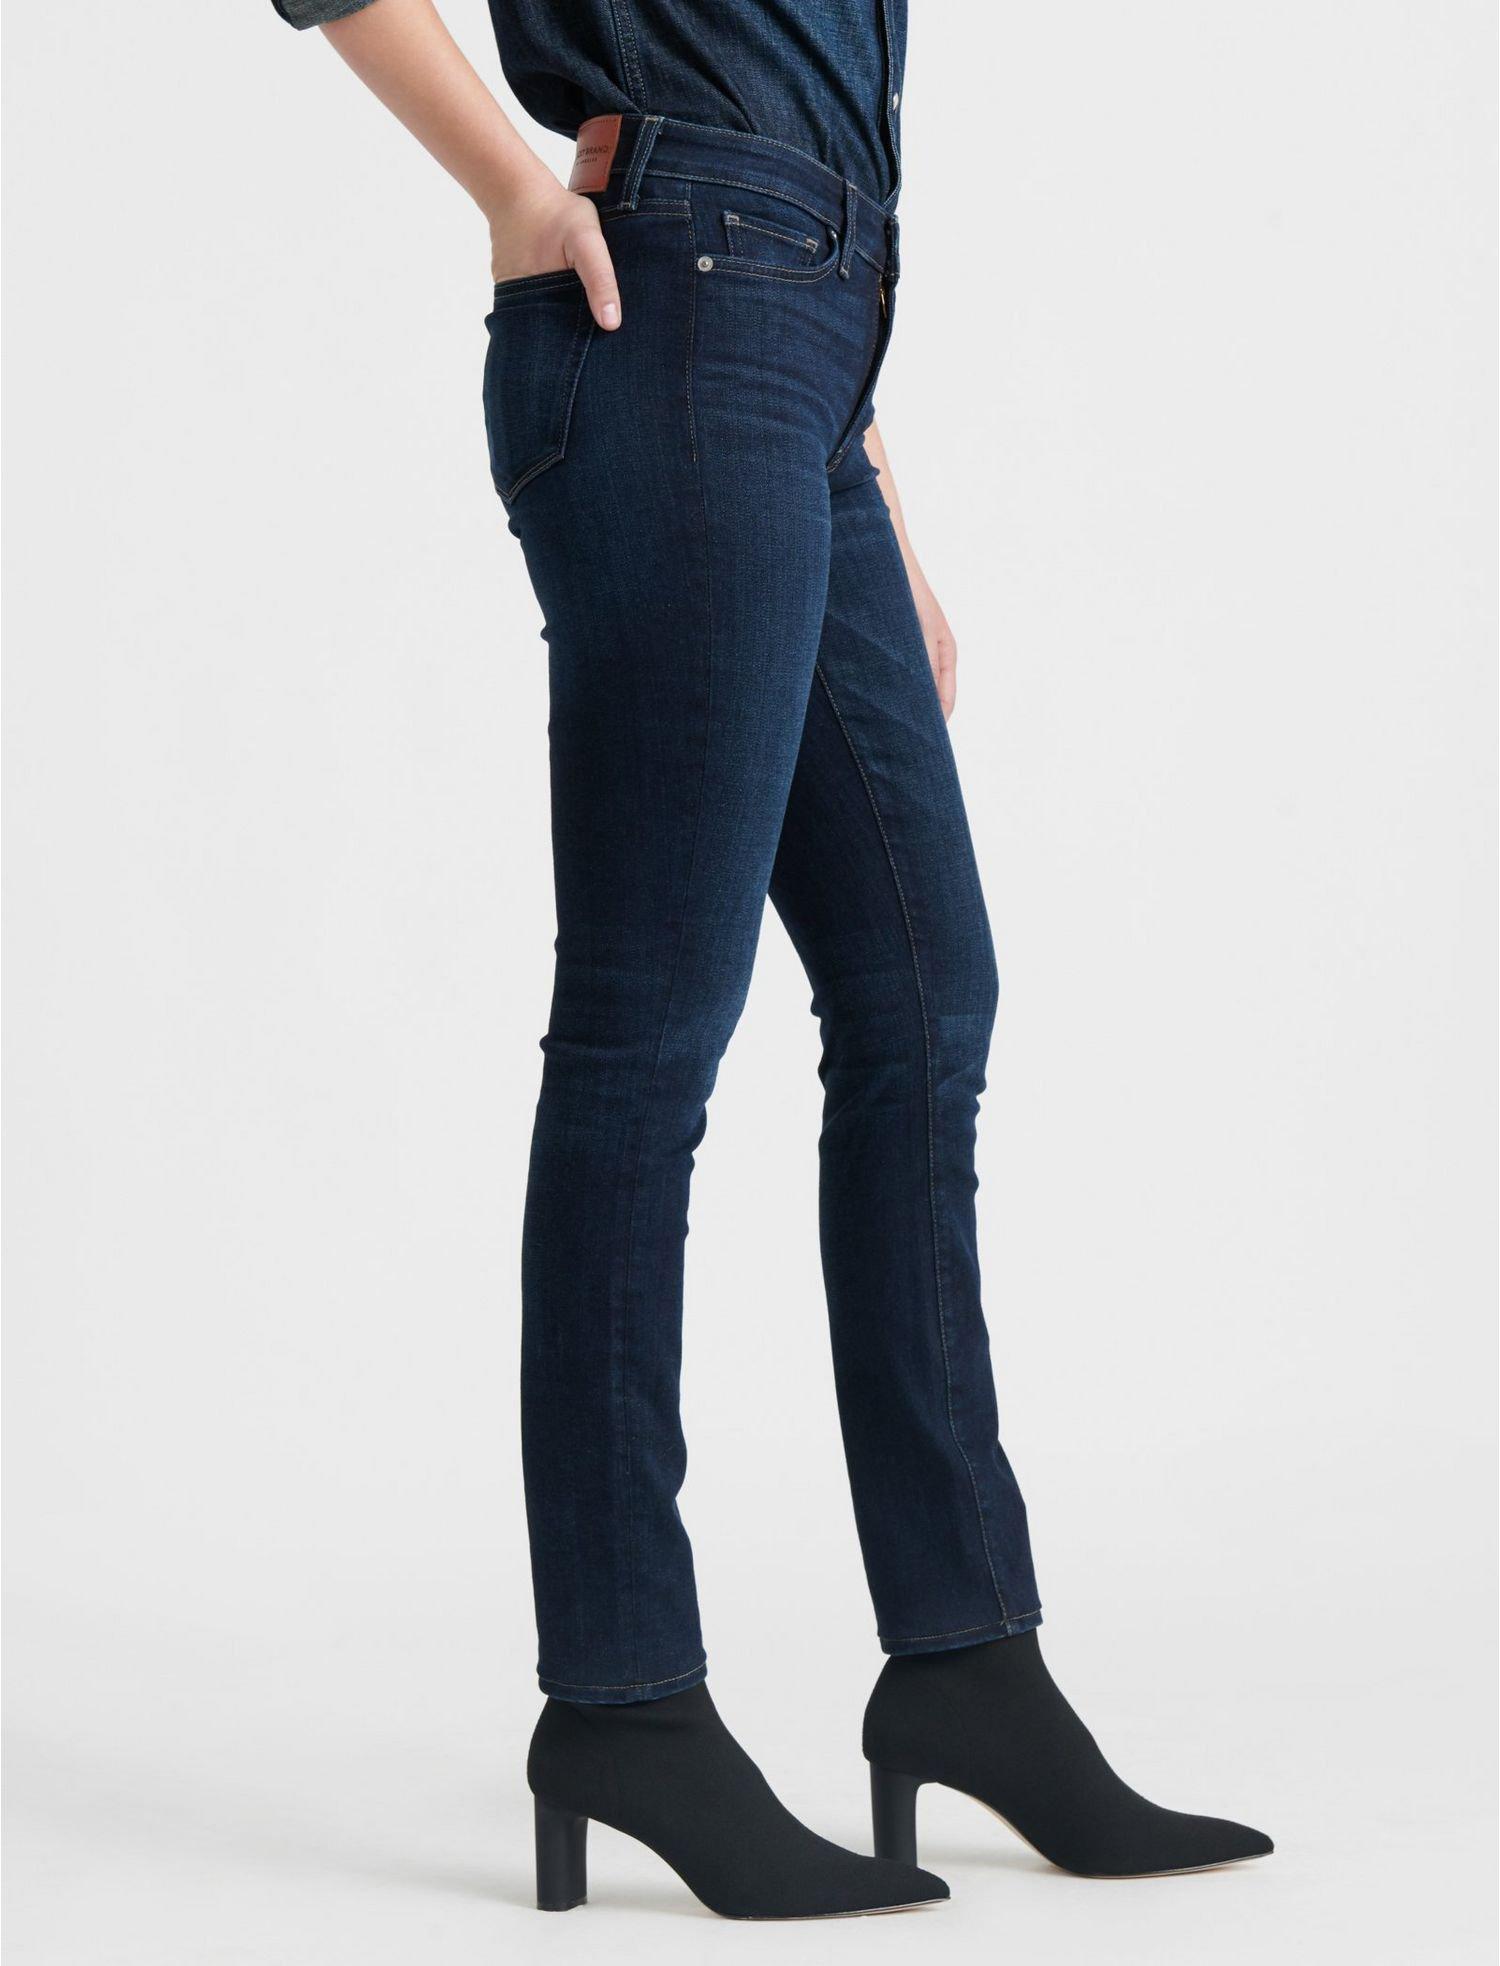 lucky brand women's jeans